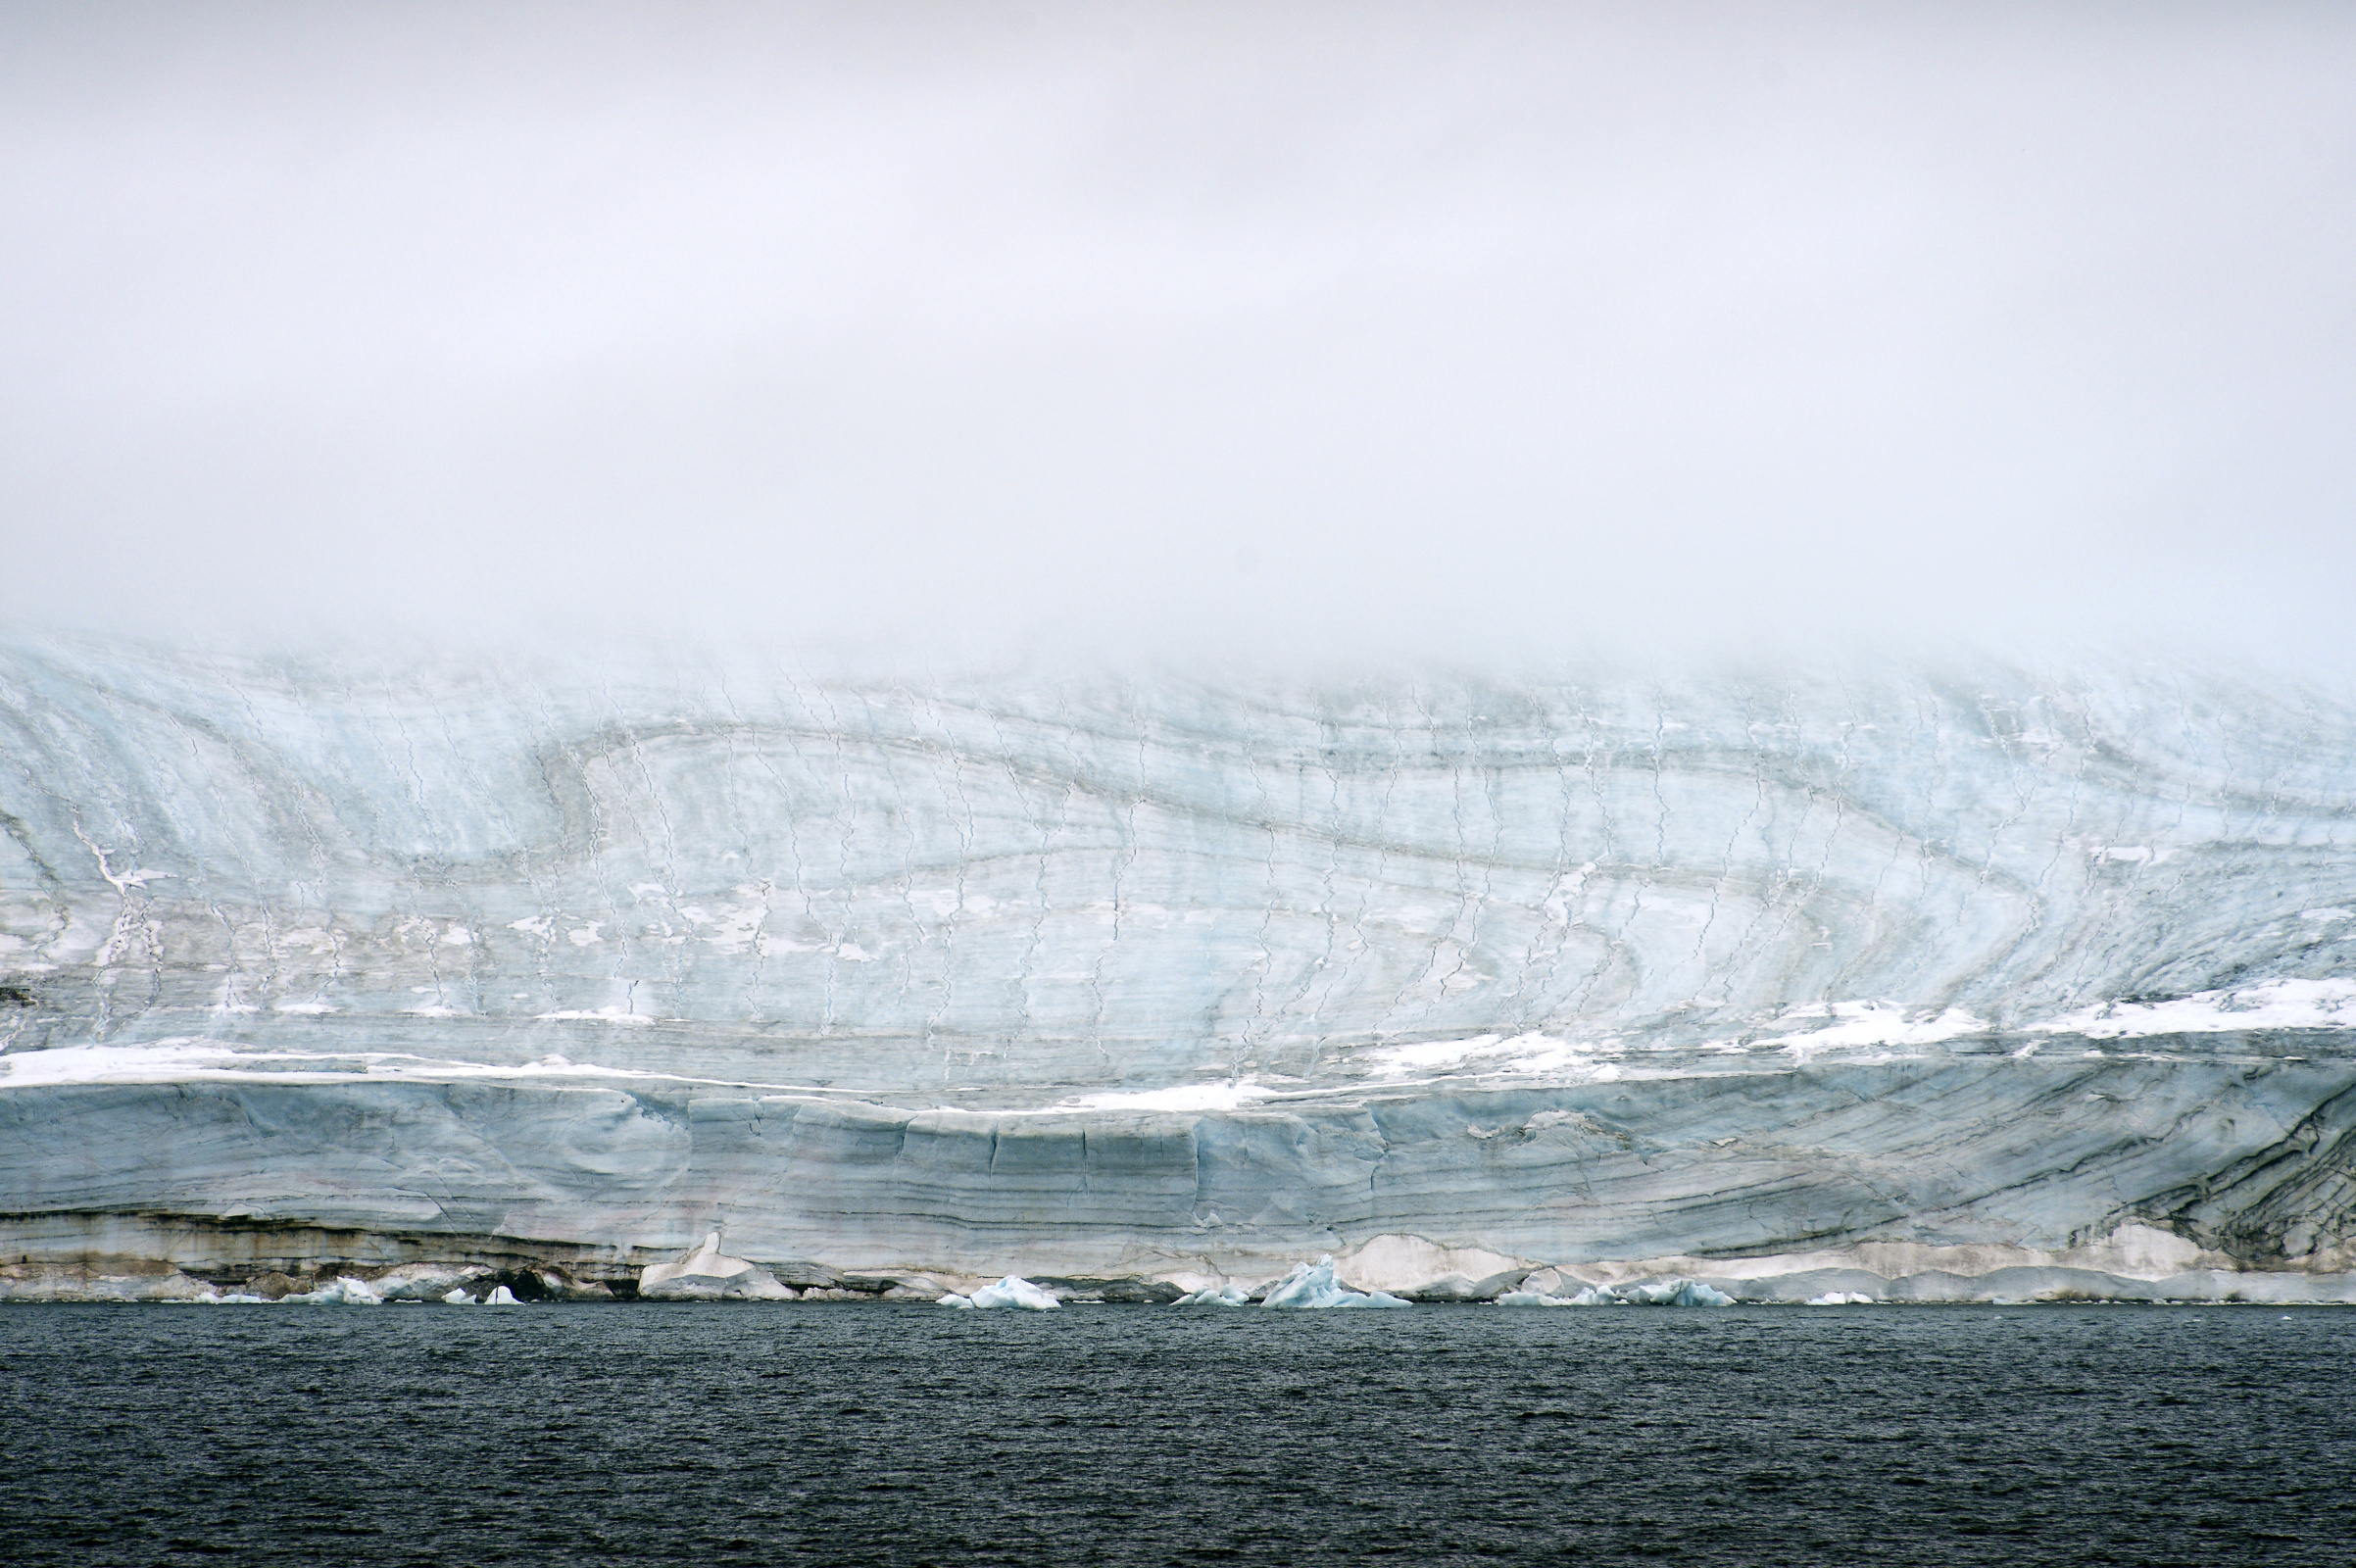 Ледник на Земле Франца-Иосифа. Фото: Сергей Земнухов, участник конкурса РГО 